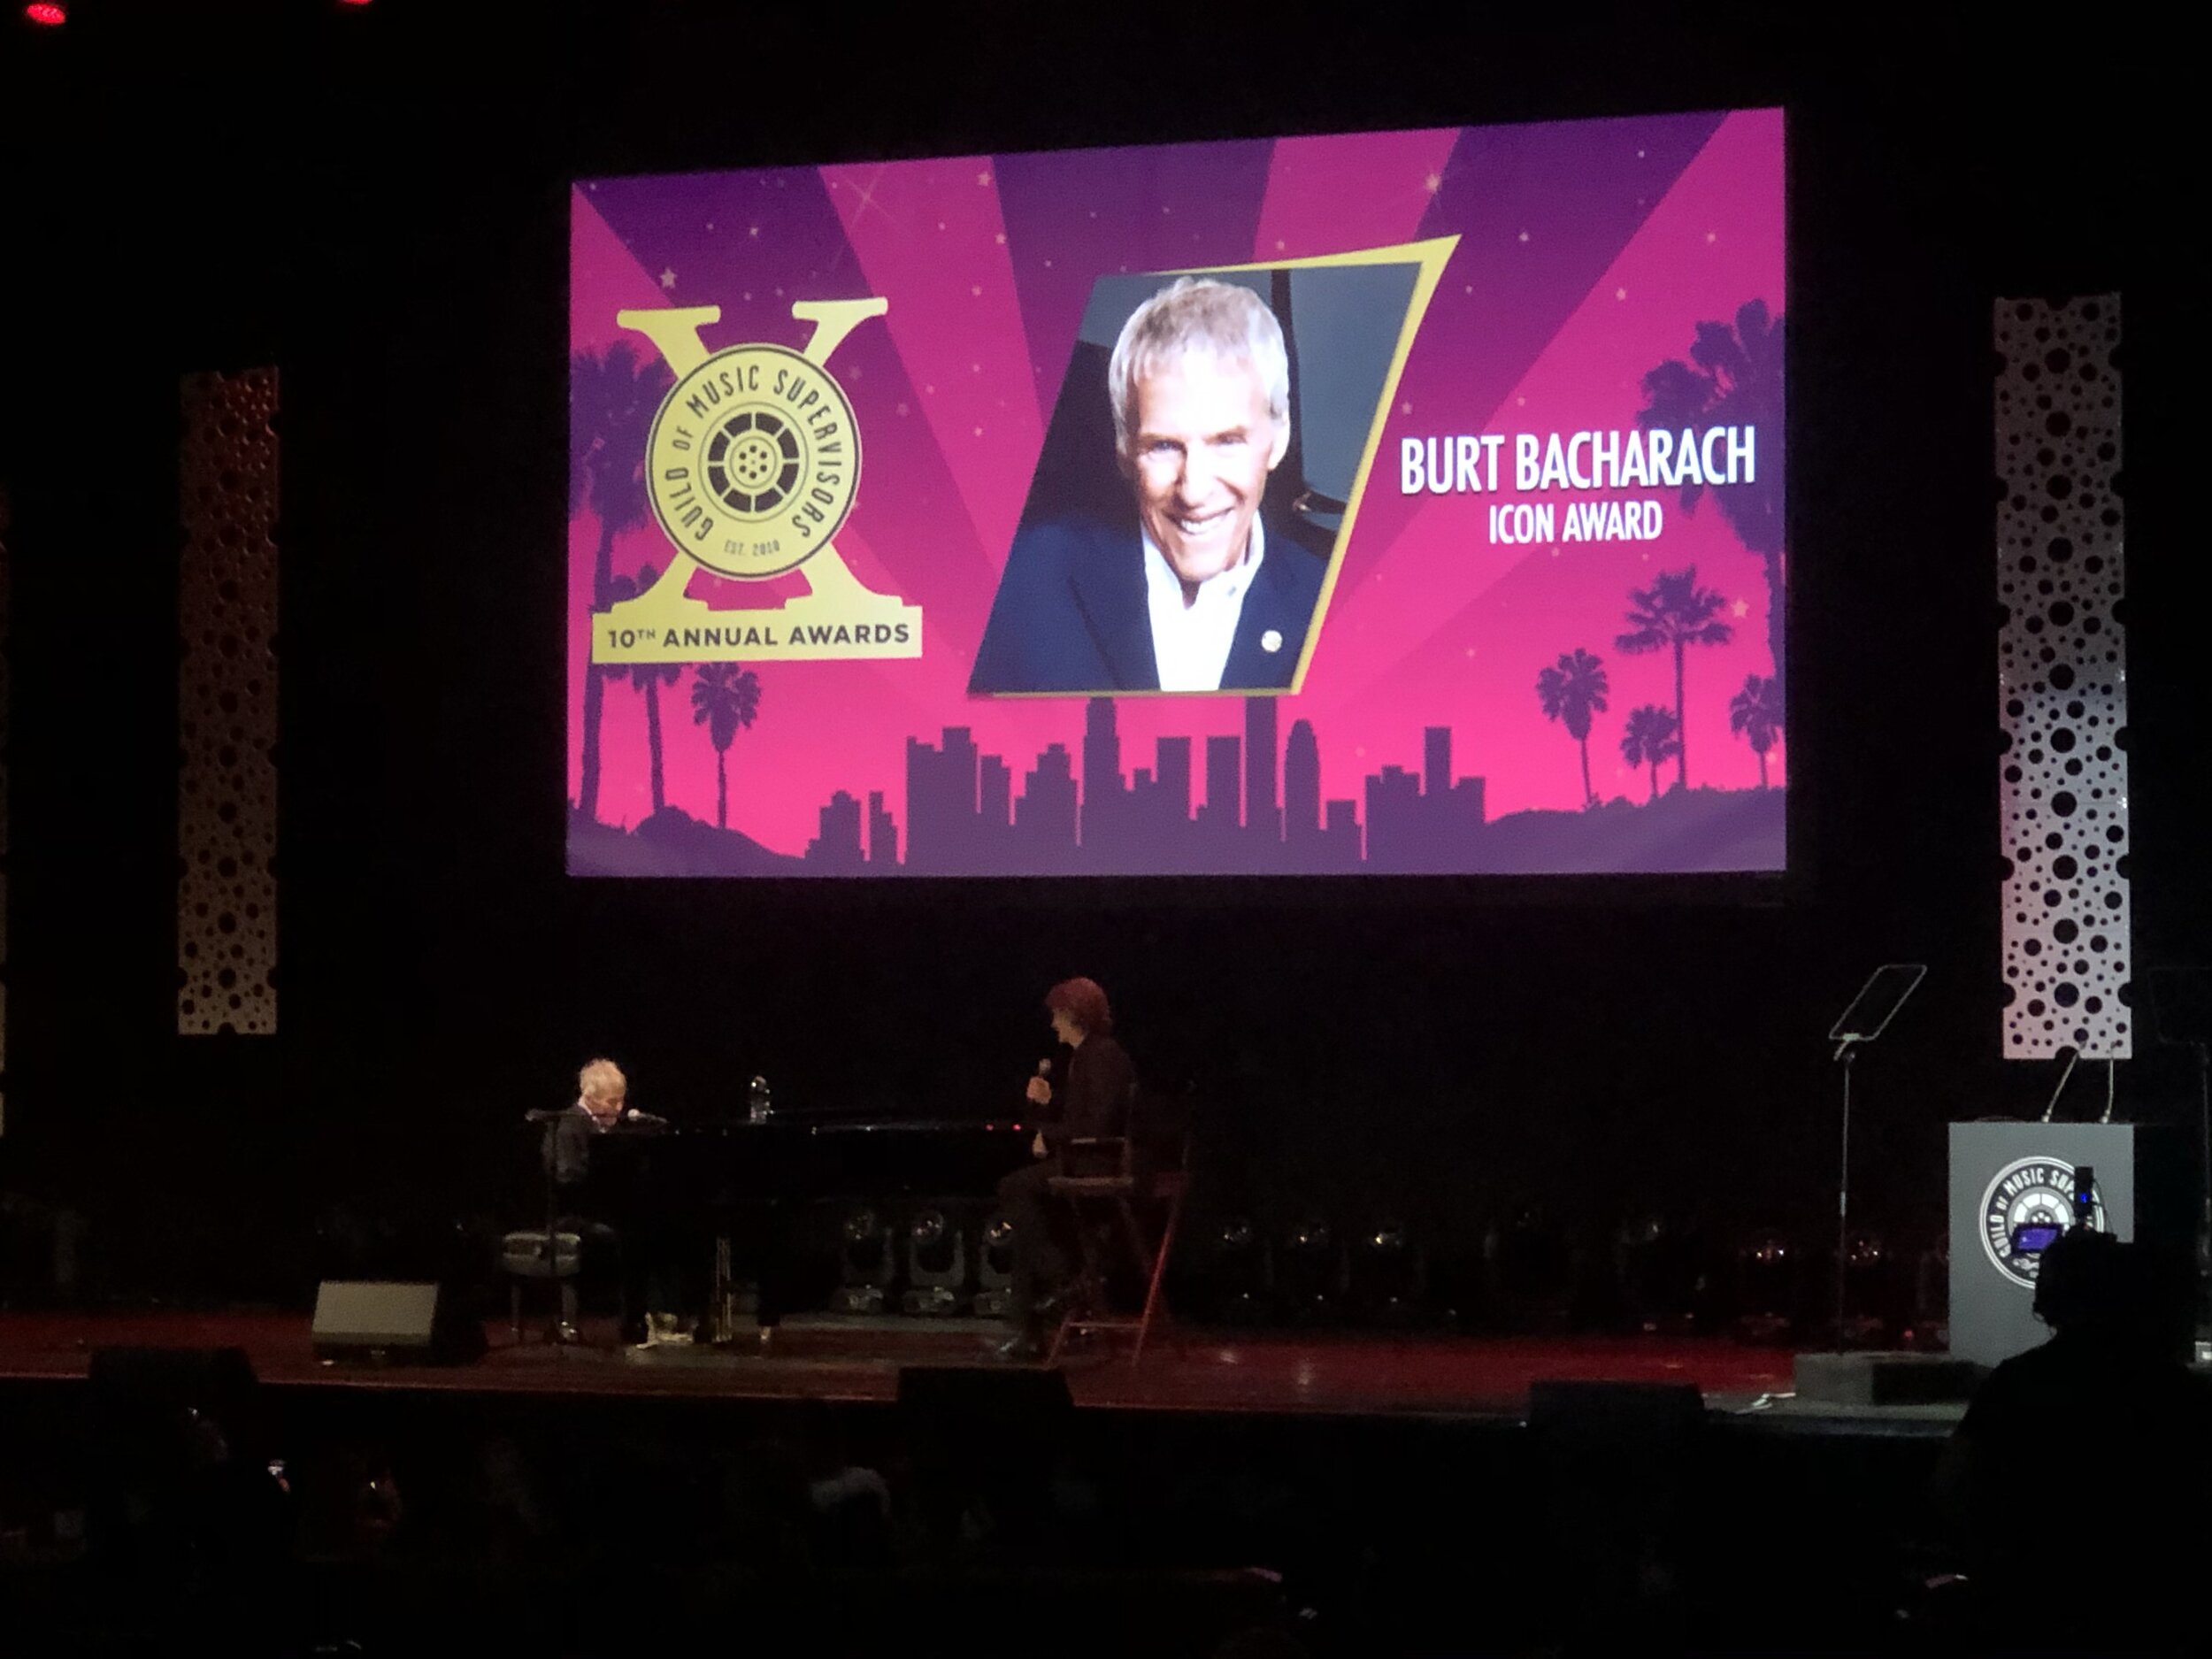  Mr. Burt Bacharach was presented the Guild’s Icon Award  